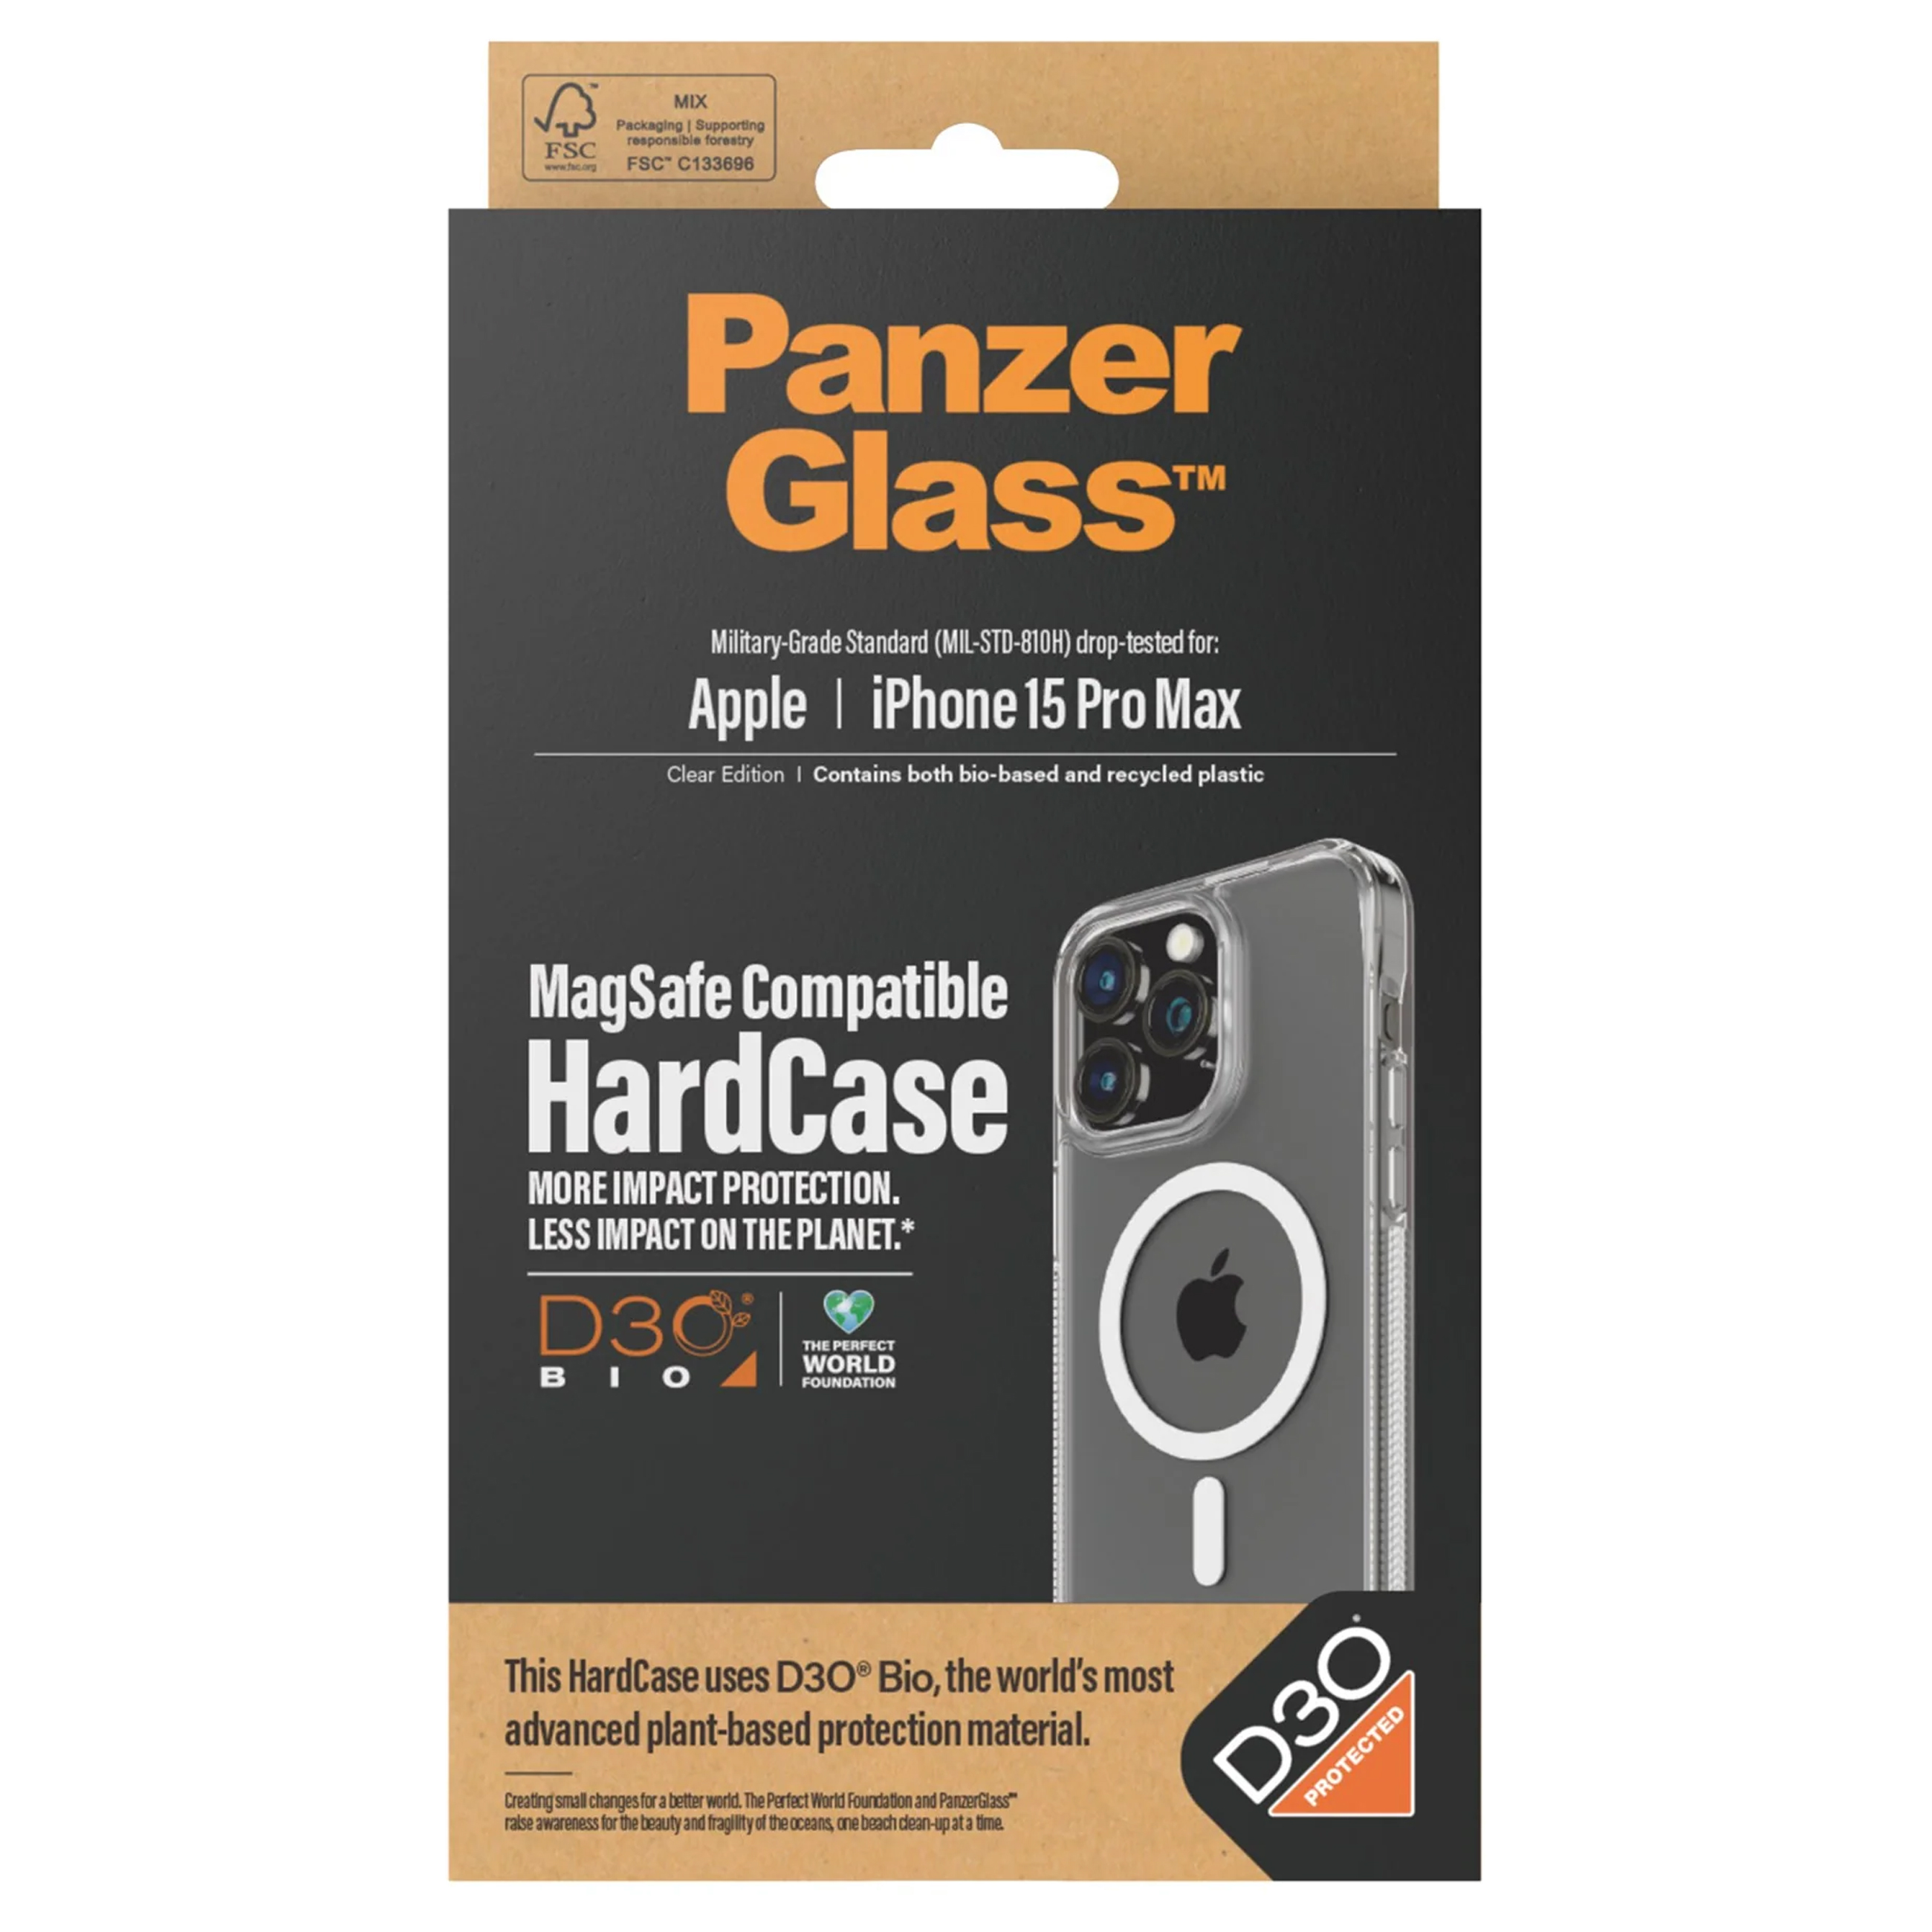 PANZERGLASS Hardcase Hülle mit D3O | MagSafe kompatibel - Smartphone Schutzhülle - Transparent - Neu